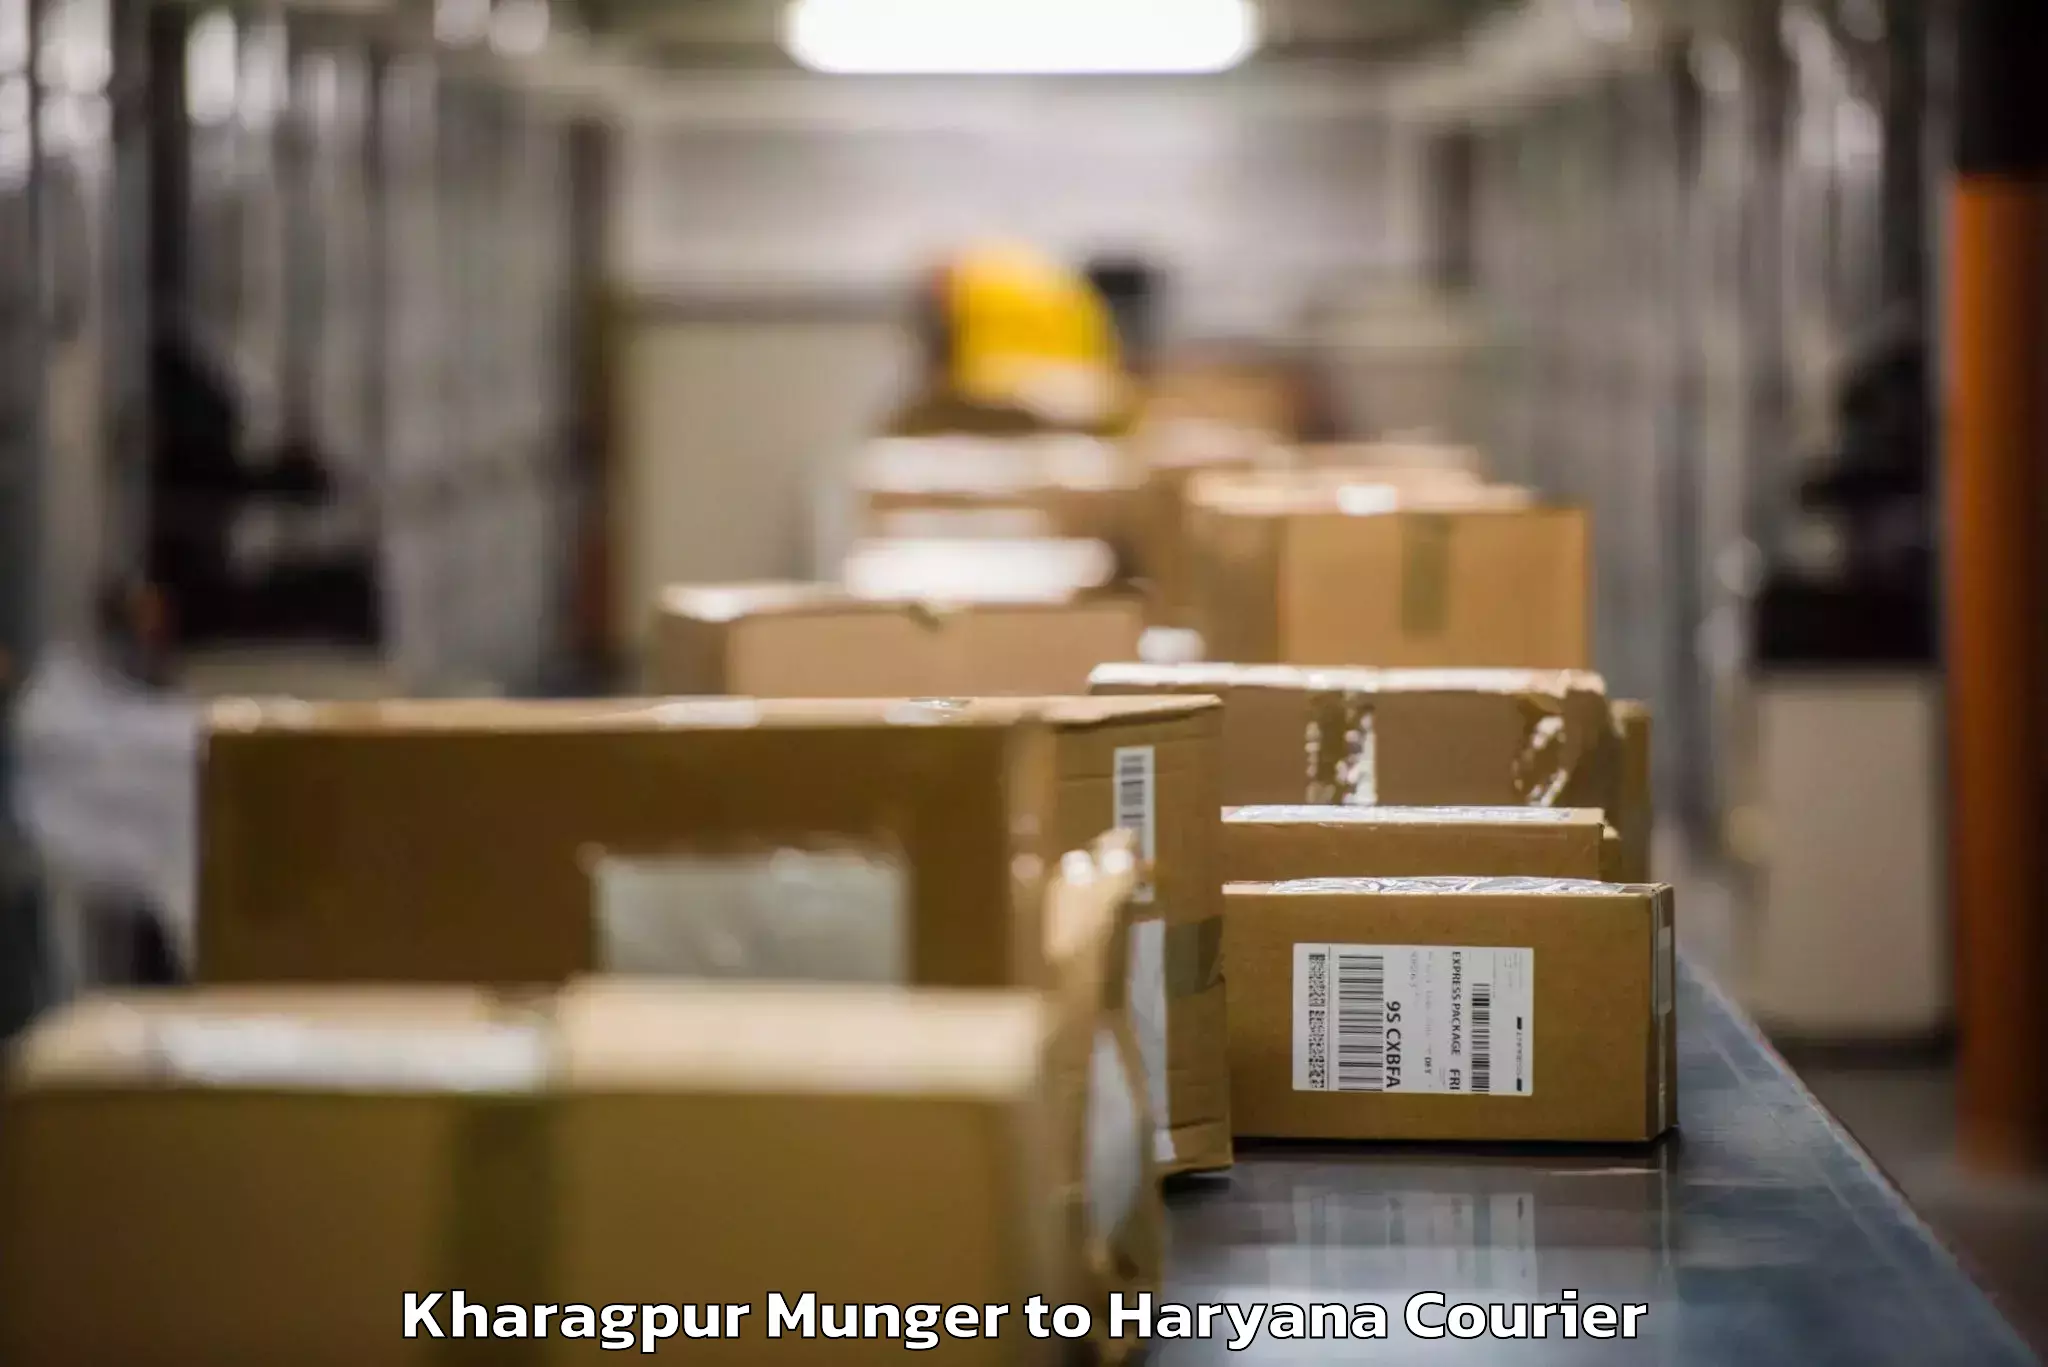 Baggage transport innovation Kharagpur Munger to Palwal